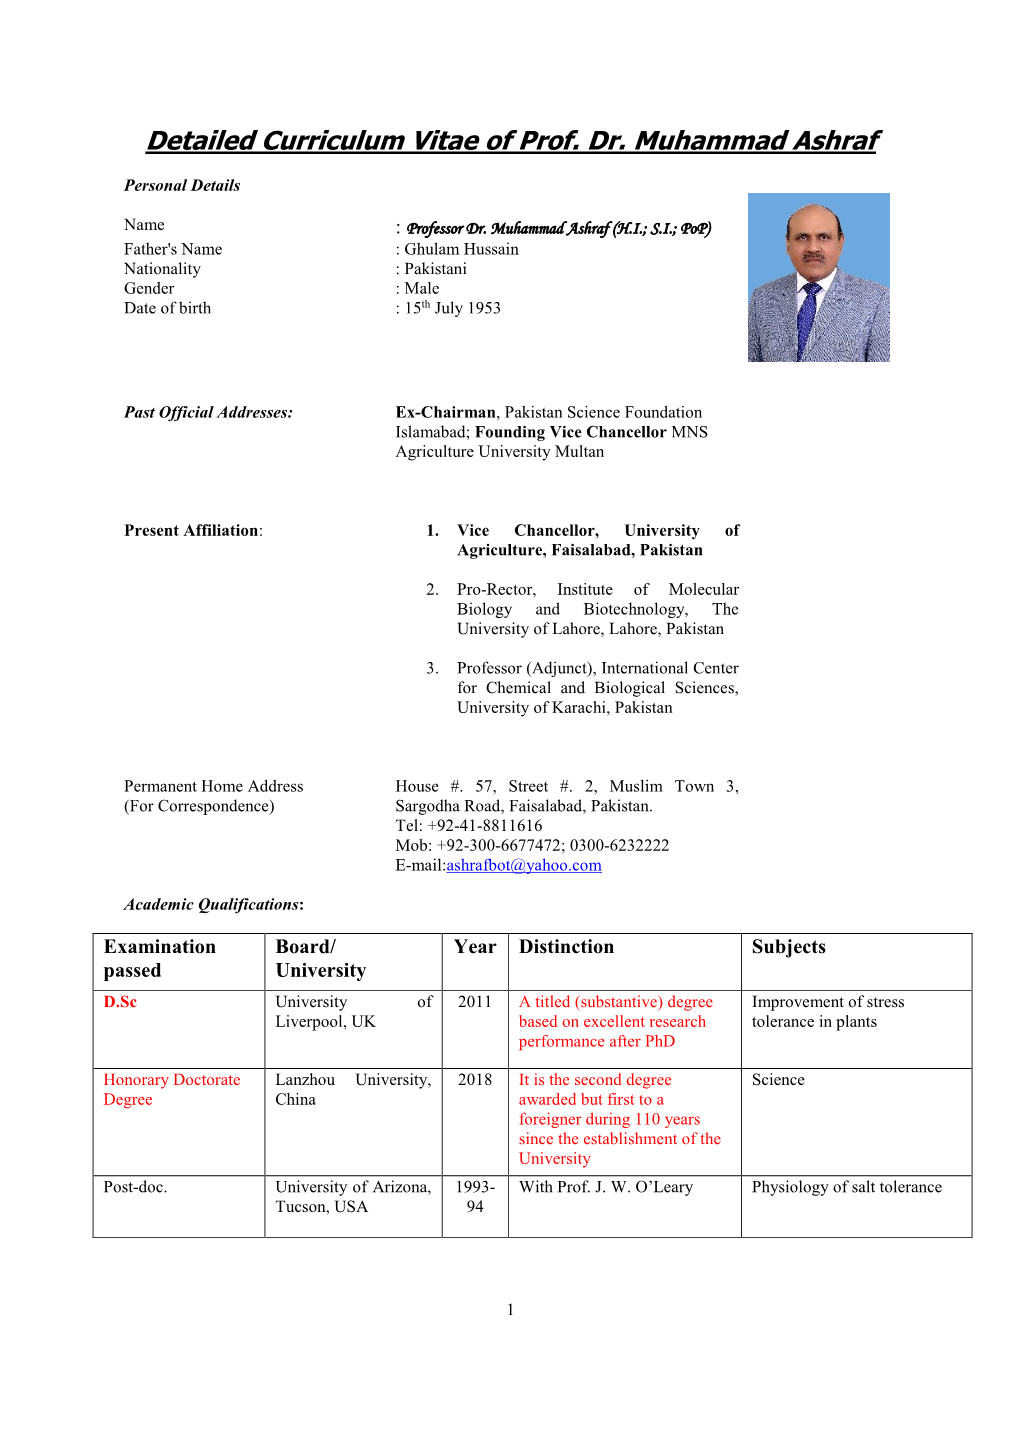 Detailed Curriculum Vitae of Prof. Dr. Muhammad Ashraf